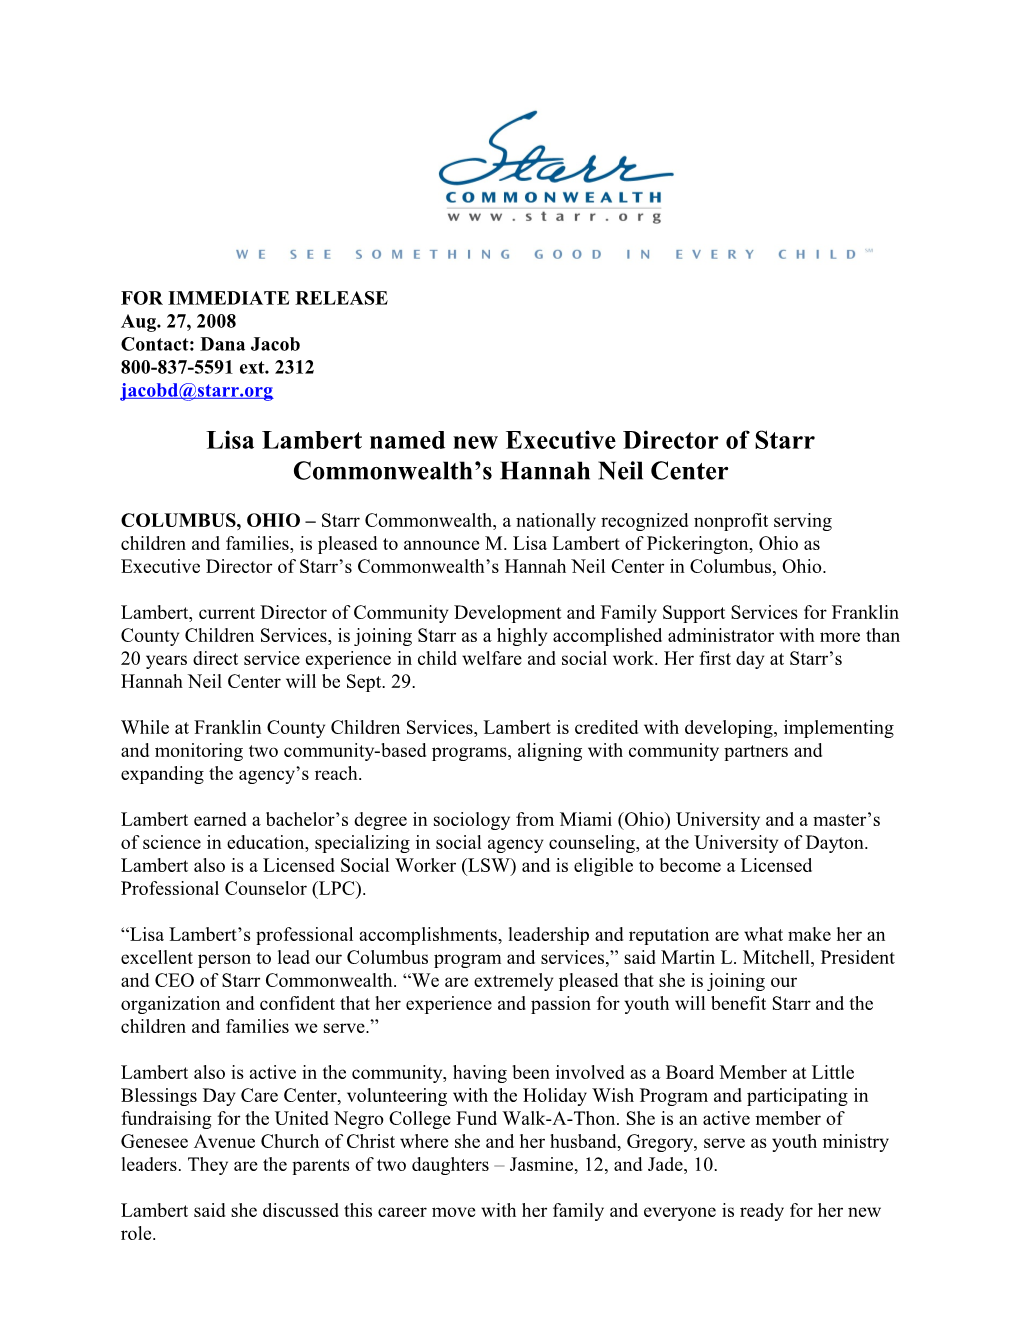 Lisa Lambert Named New Executive Director of Starrcommonwealth S Hannahneilcenter